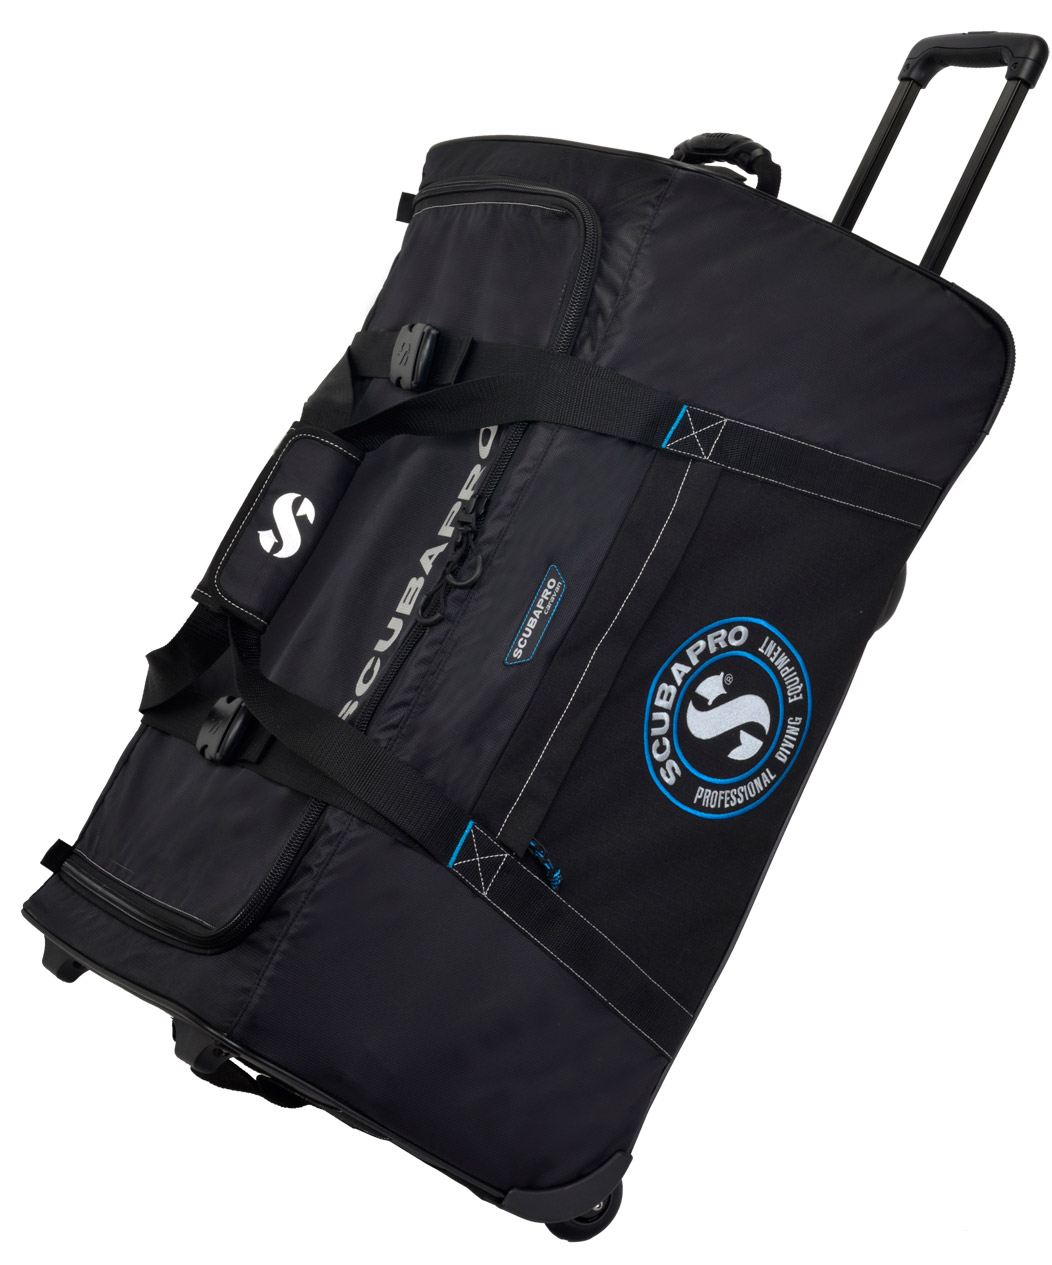 Scubapro Caravan Scuba Gear Bag for Scuba Diving or Snorkeling 